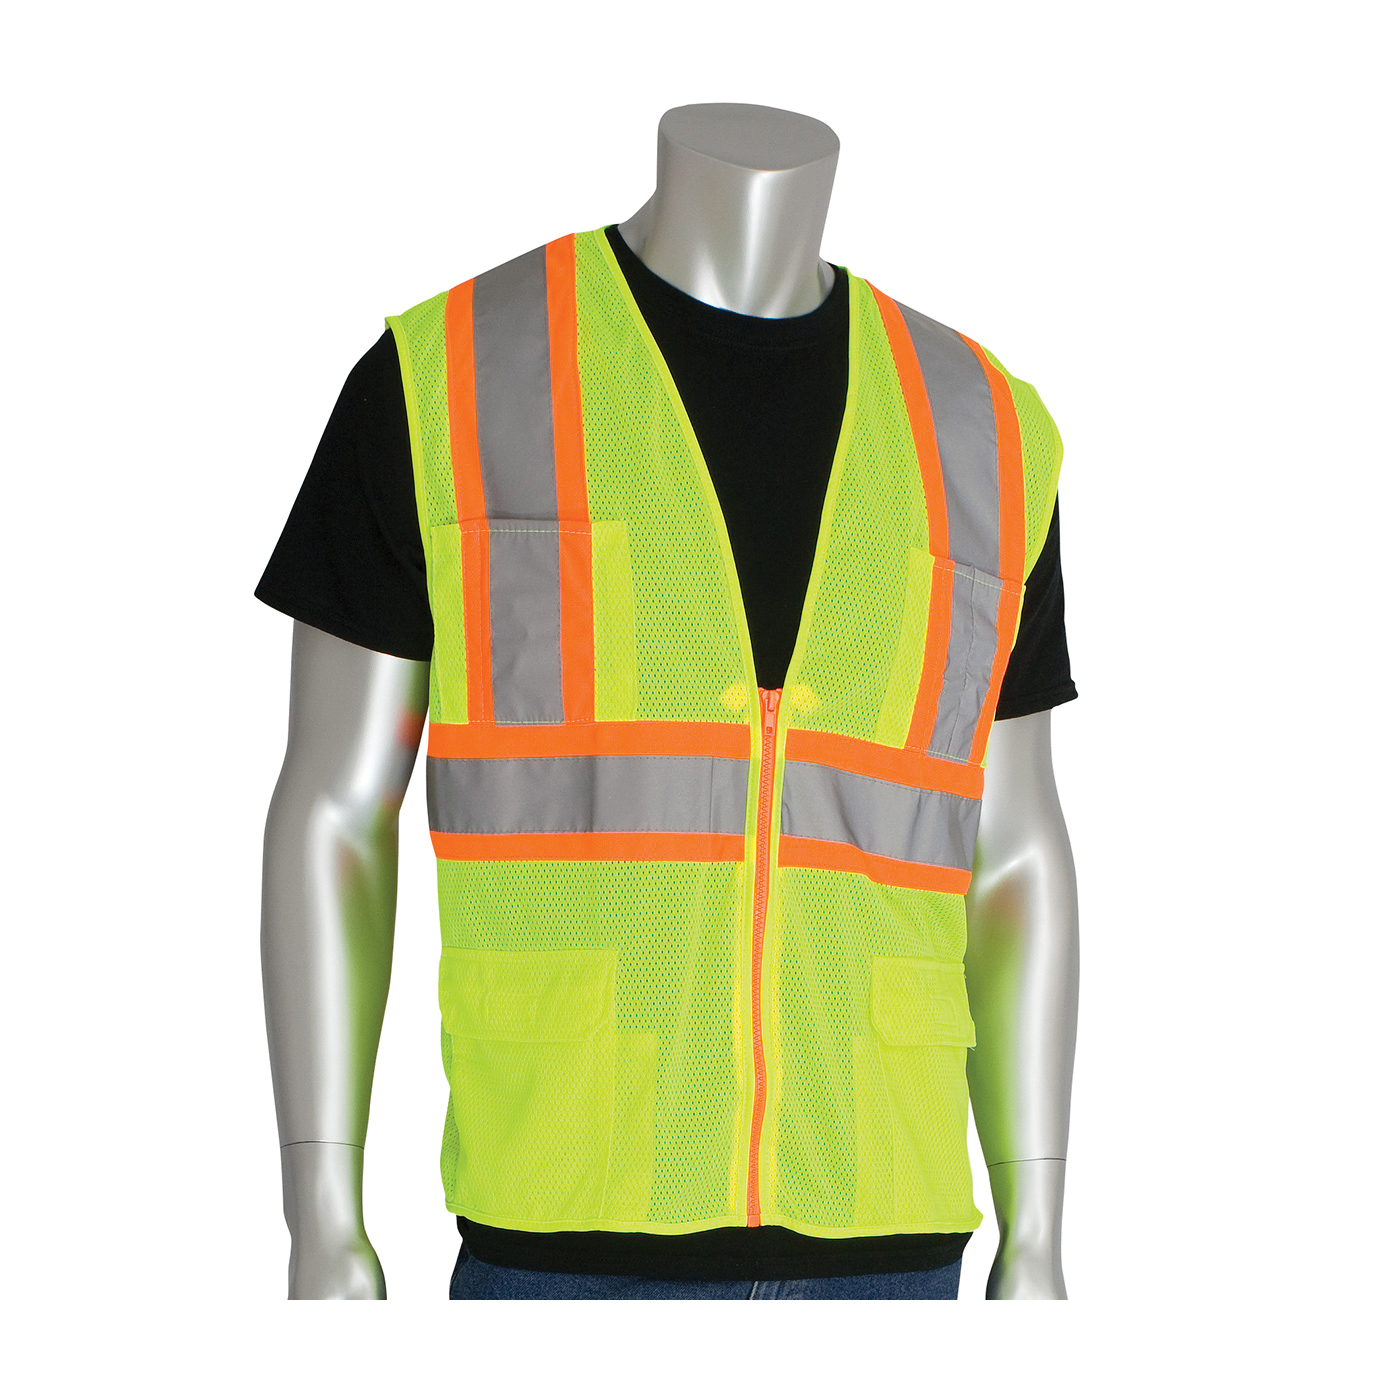 PIP® 302-MAPMLY-3X 2-Tone Premium Surveyor Safety Vest, 3XL, Hi-Viz Lime Yellow, Polyester, Zipper Closure, 11 Pockets, ANSI Class: Class 2, Specifications Met: ANSI 107 Type R